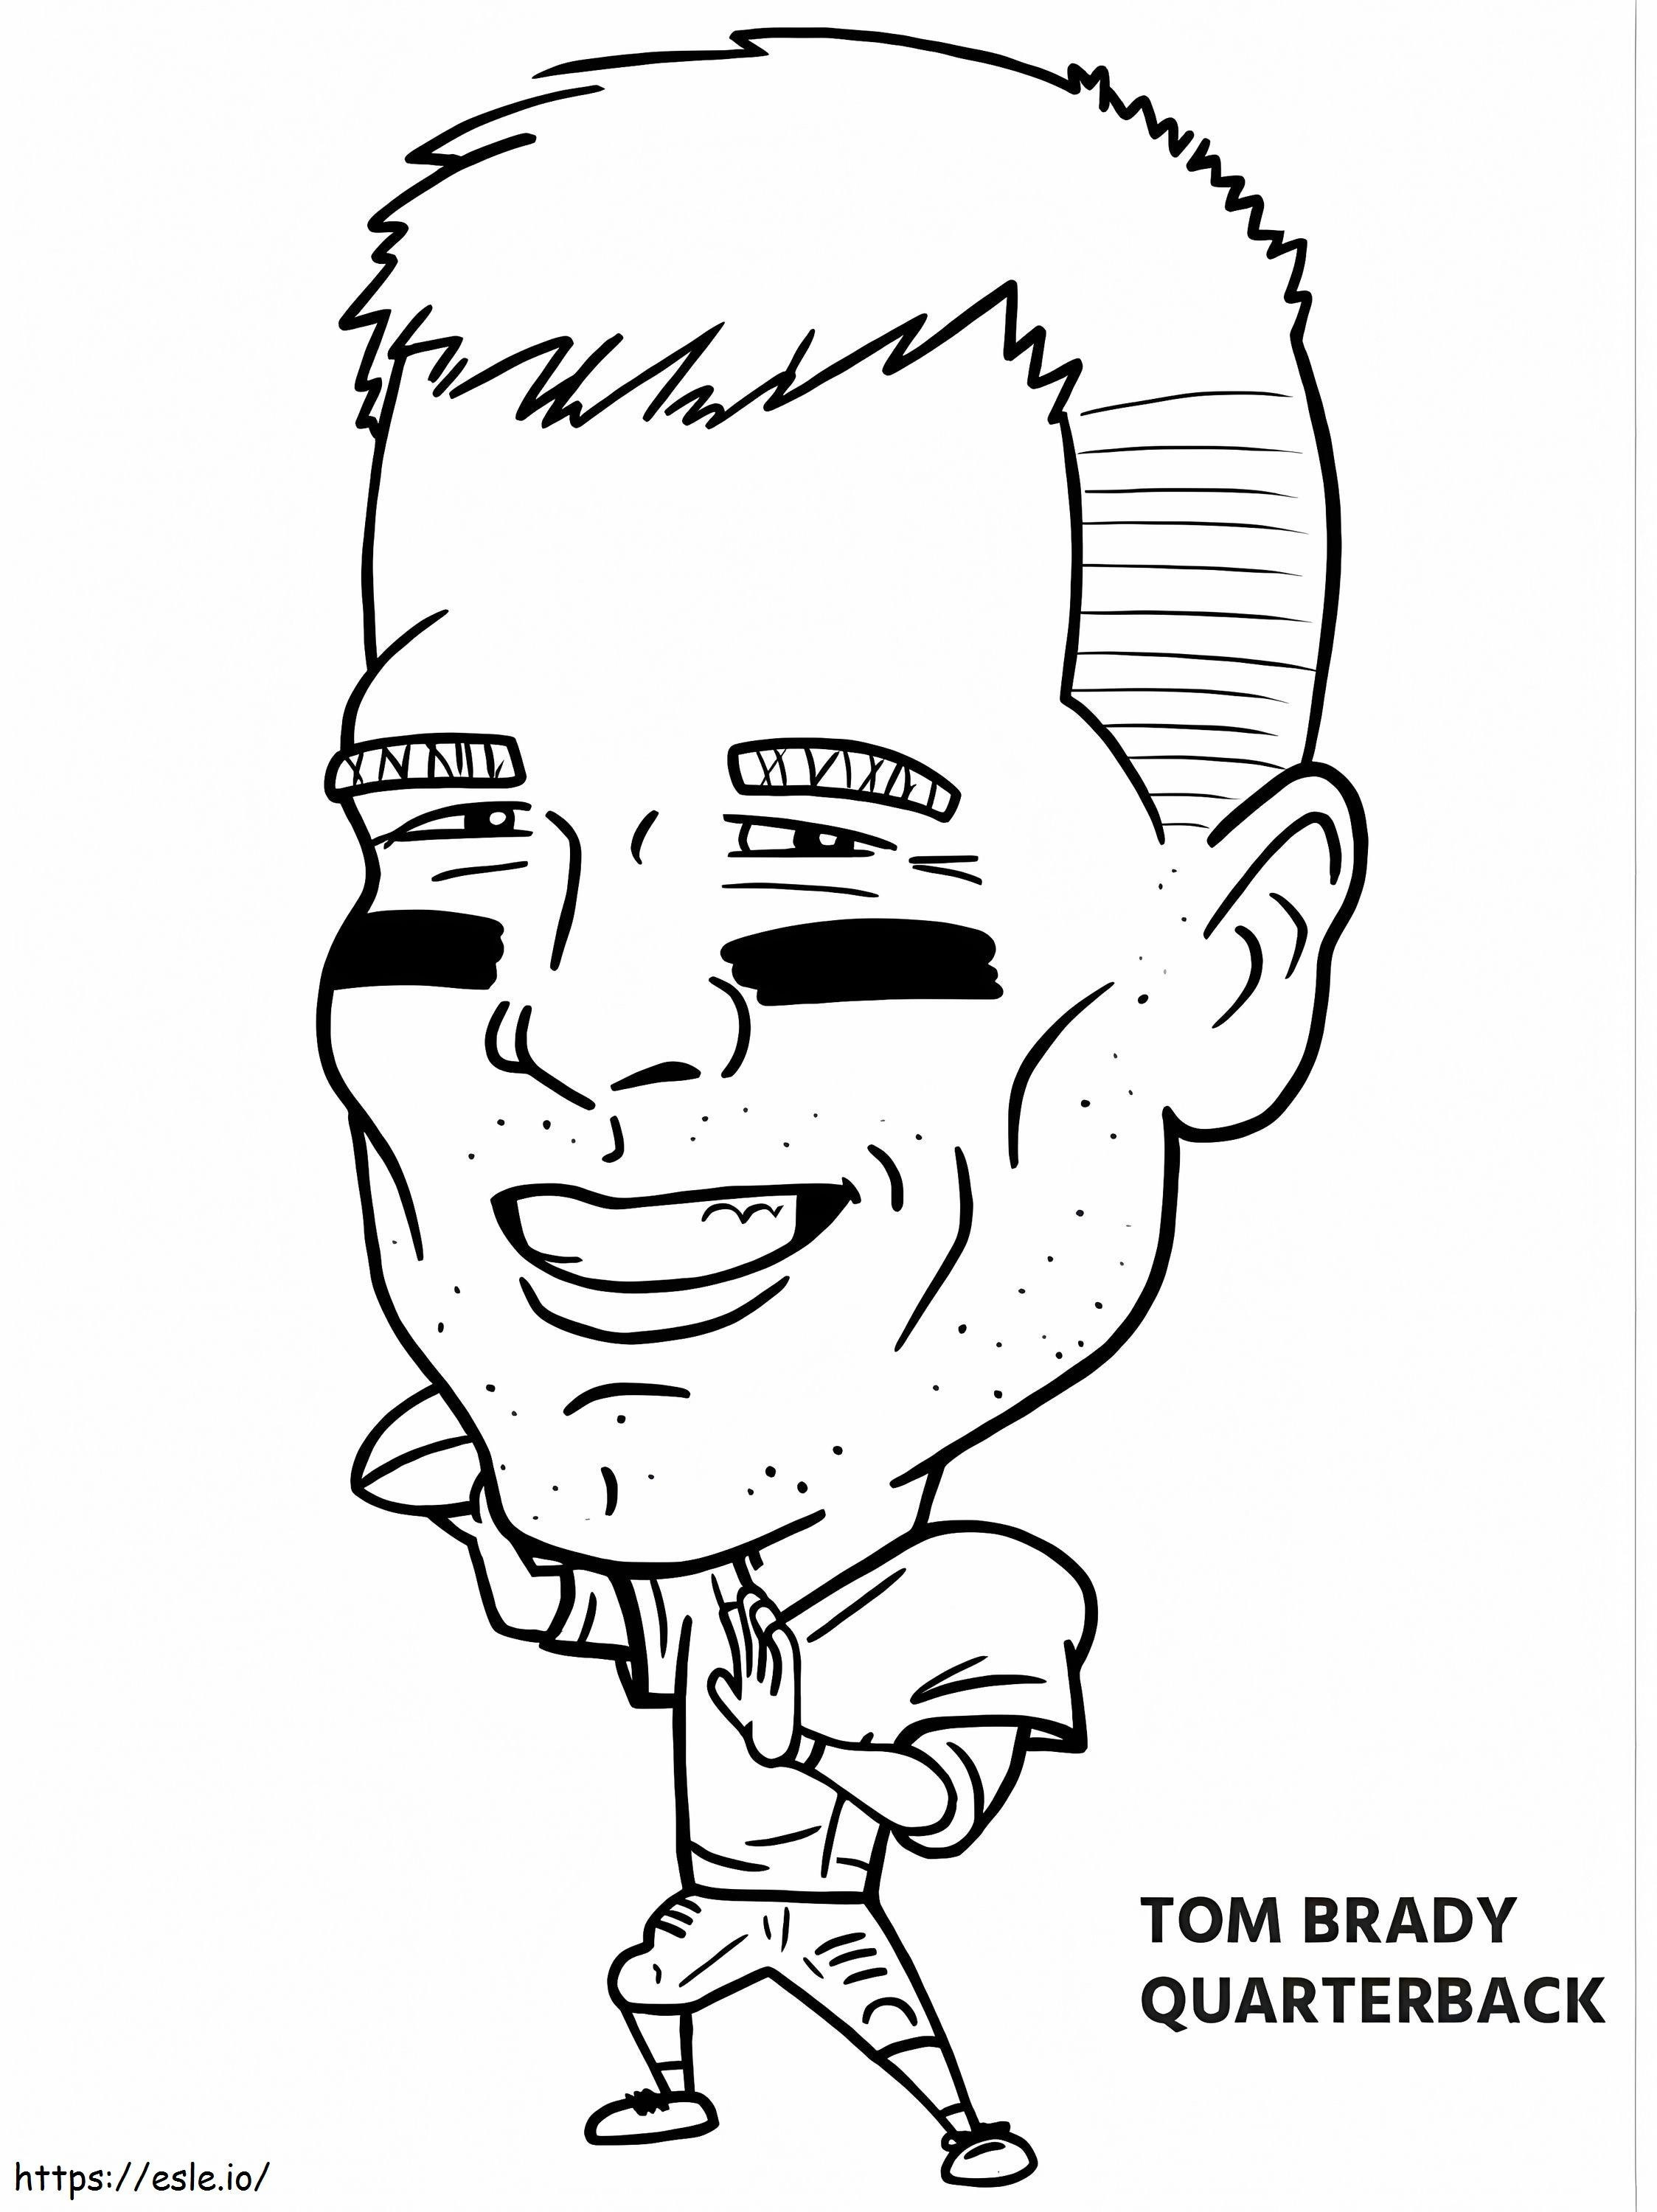 Tom Brady coloring page